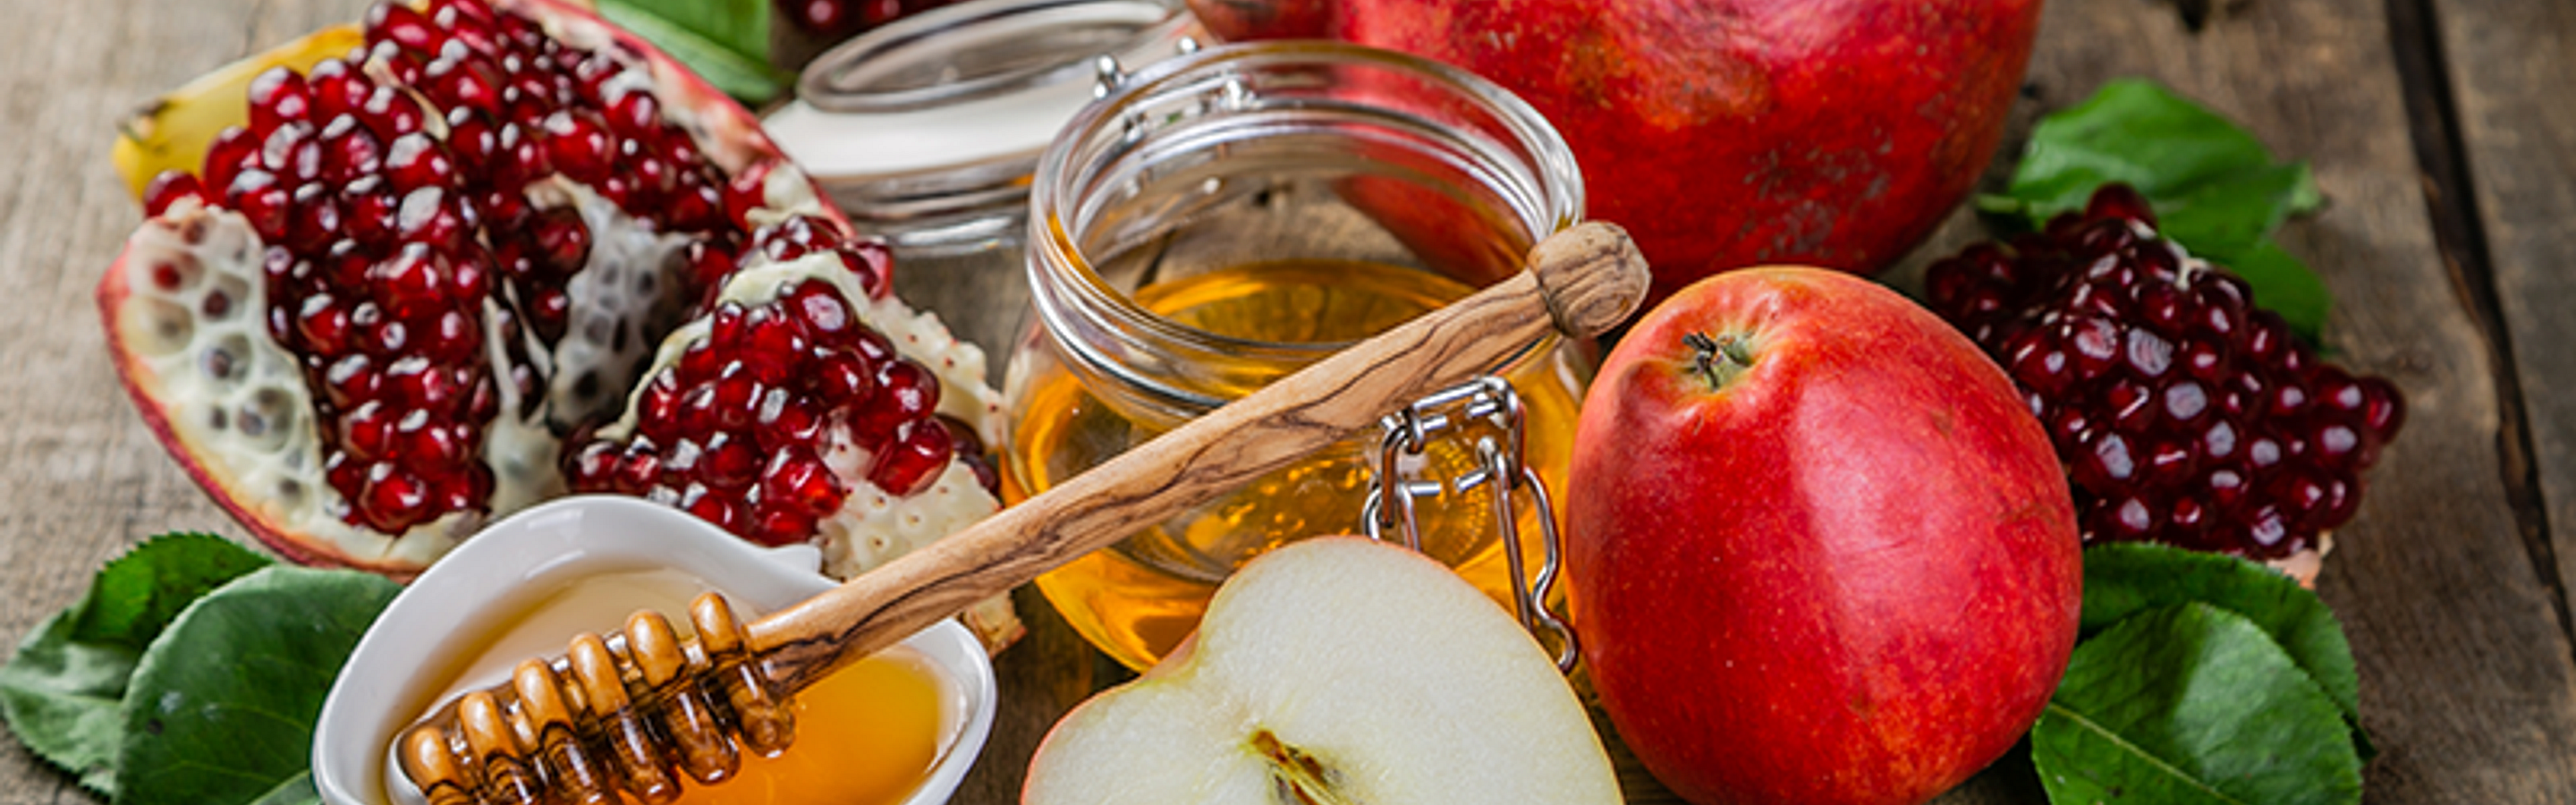 Rosh Hashanah image of pomegranate honey and apples